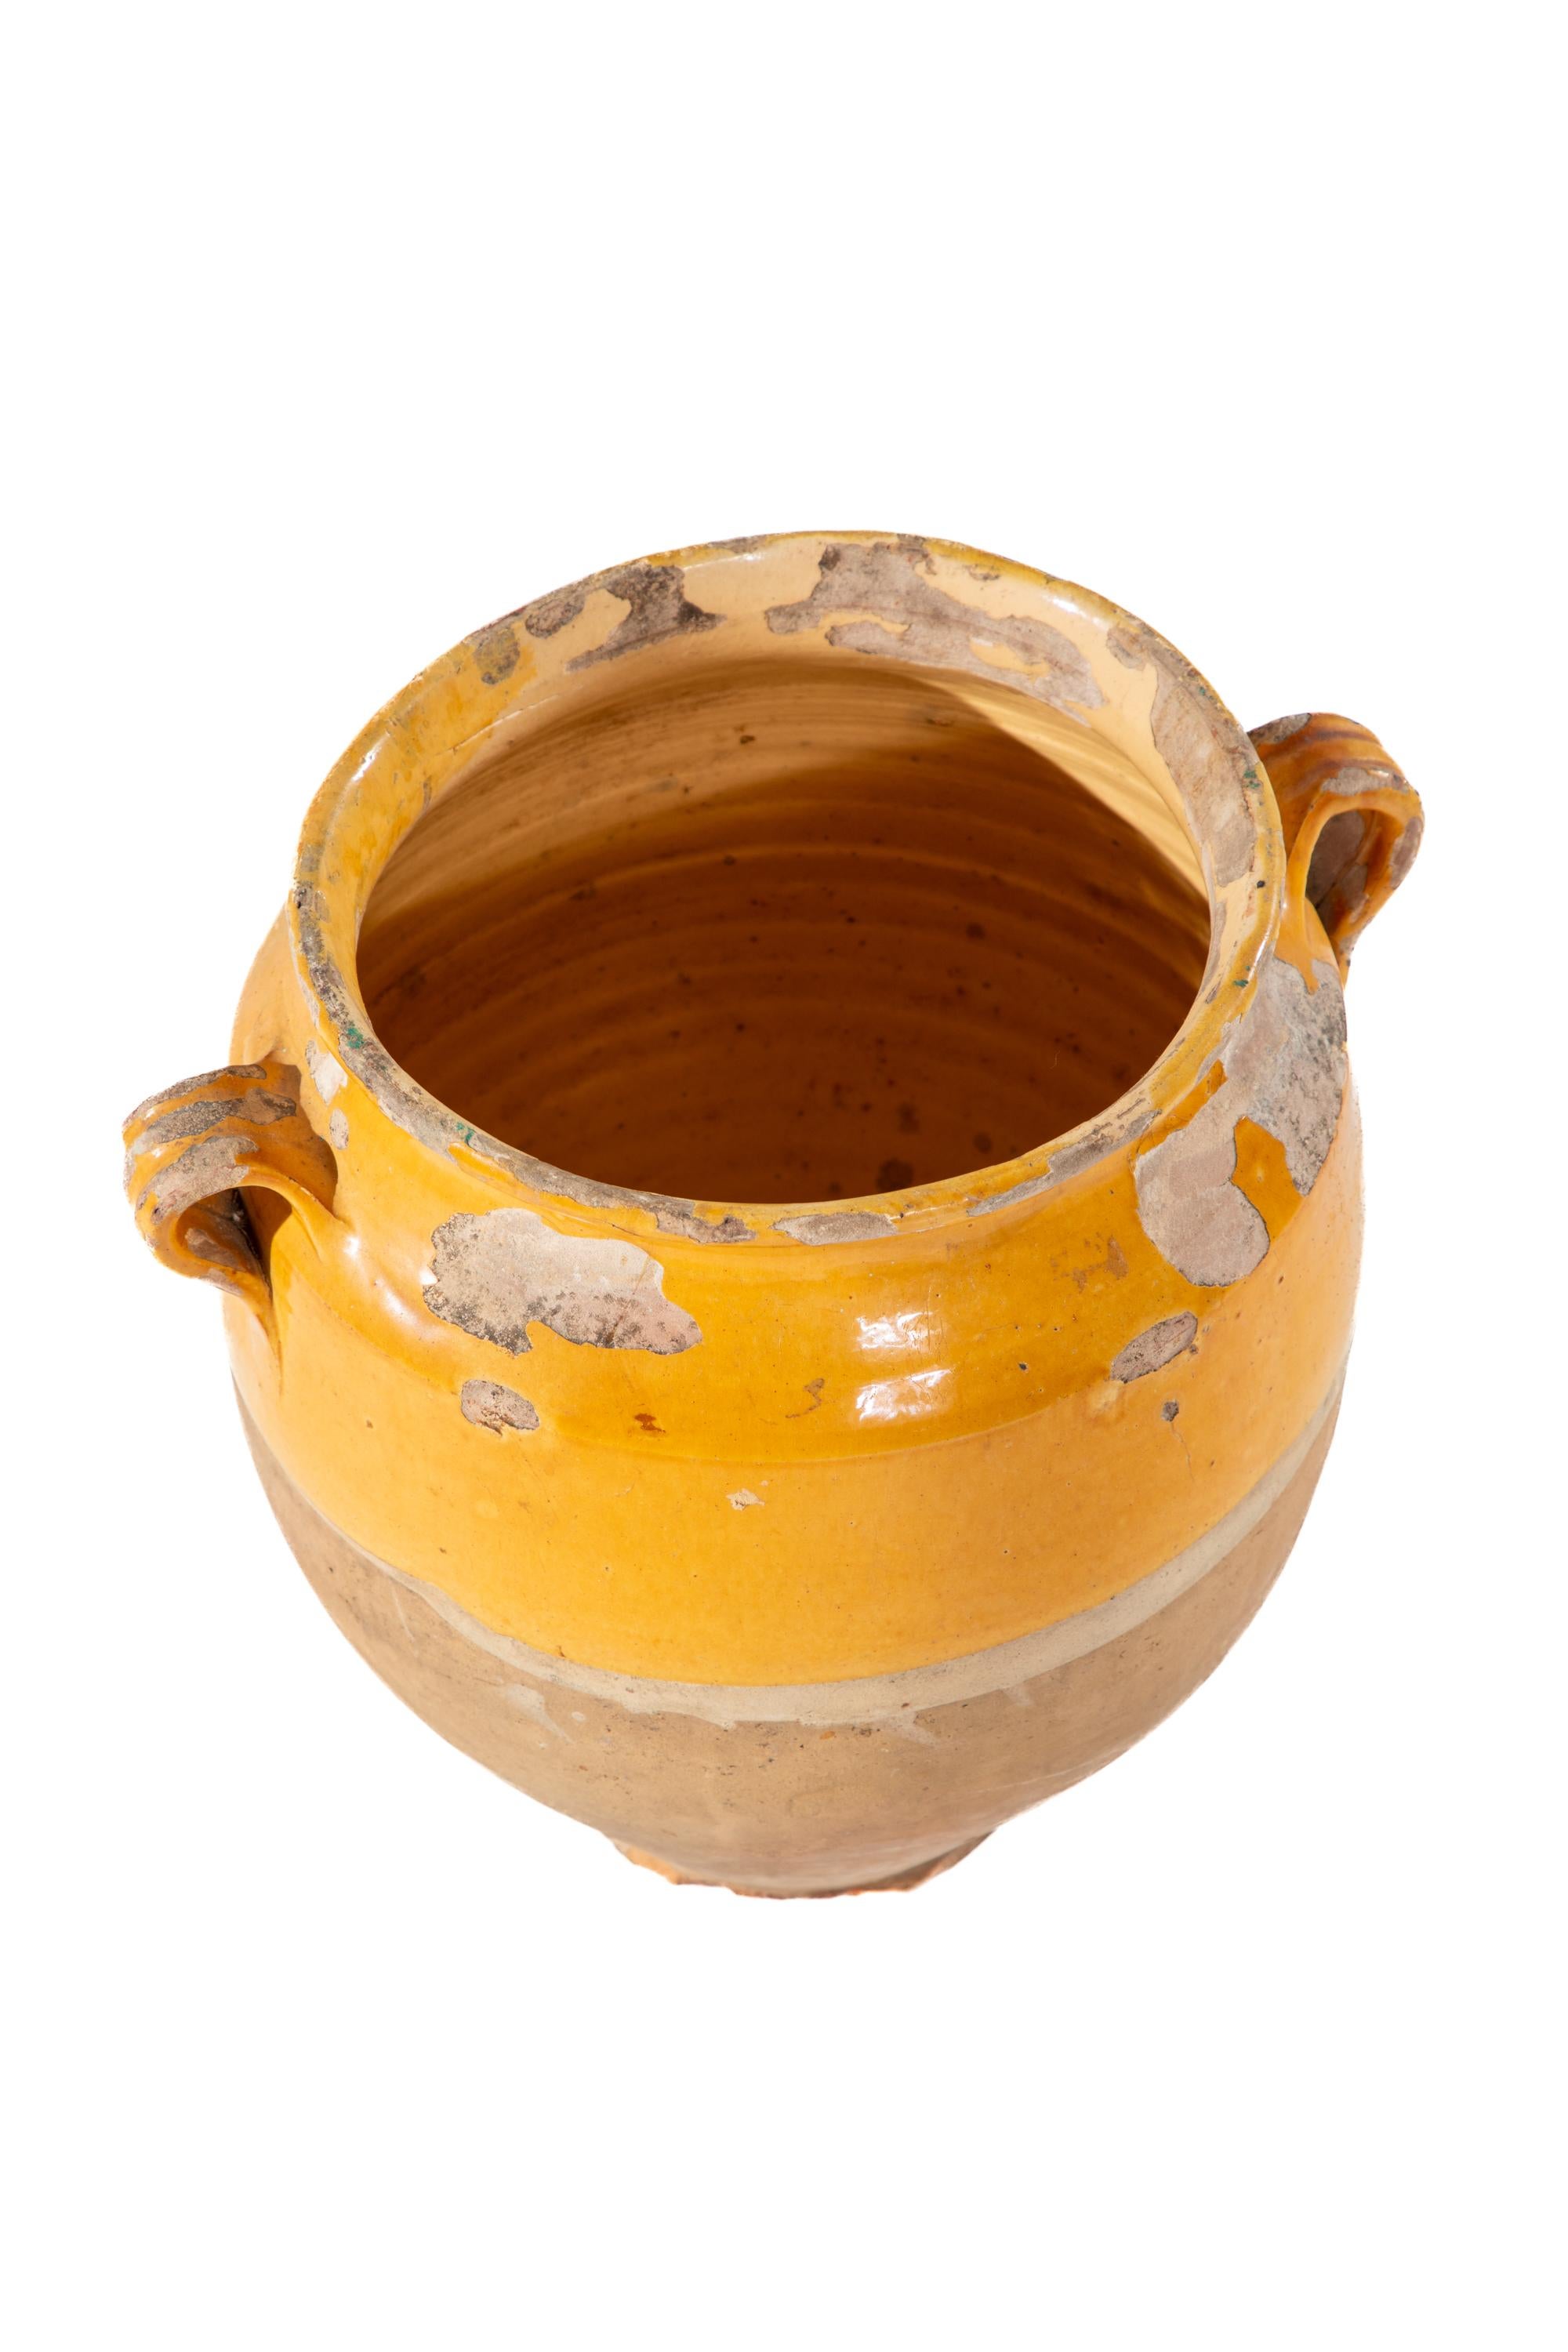 Two handled terracotta vase.  Yellow glazed top with unglazed bottom.
Unmarked.